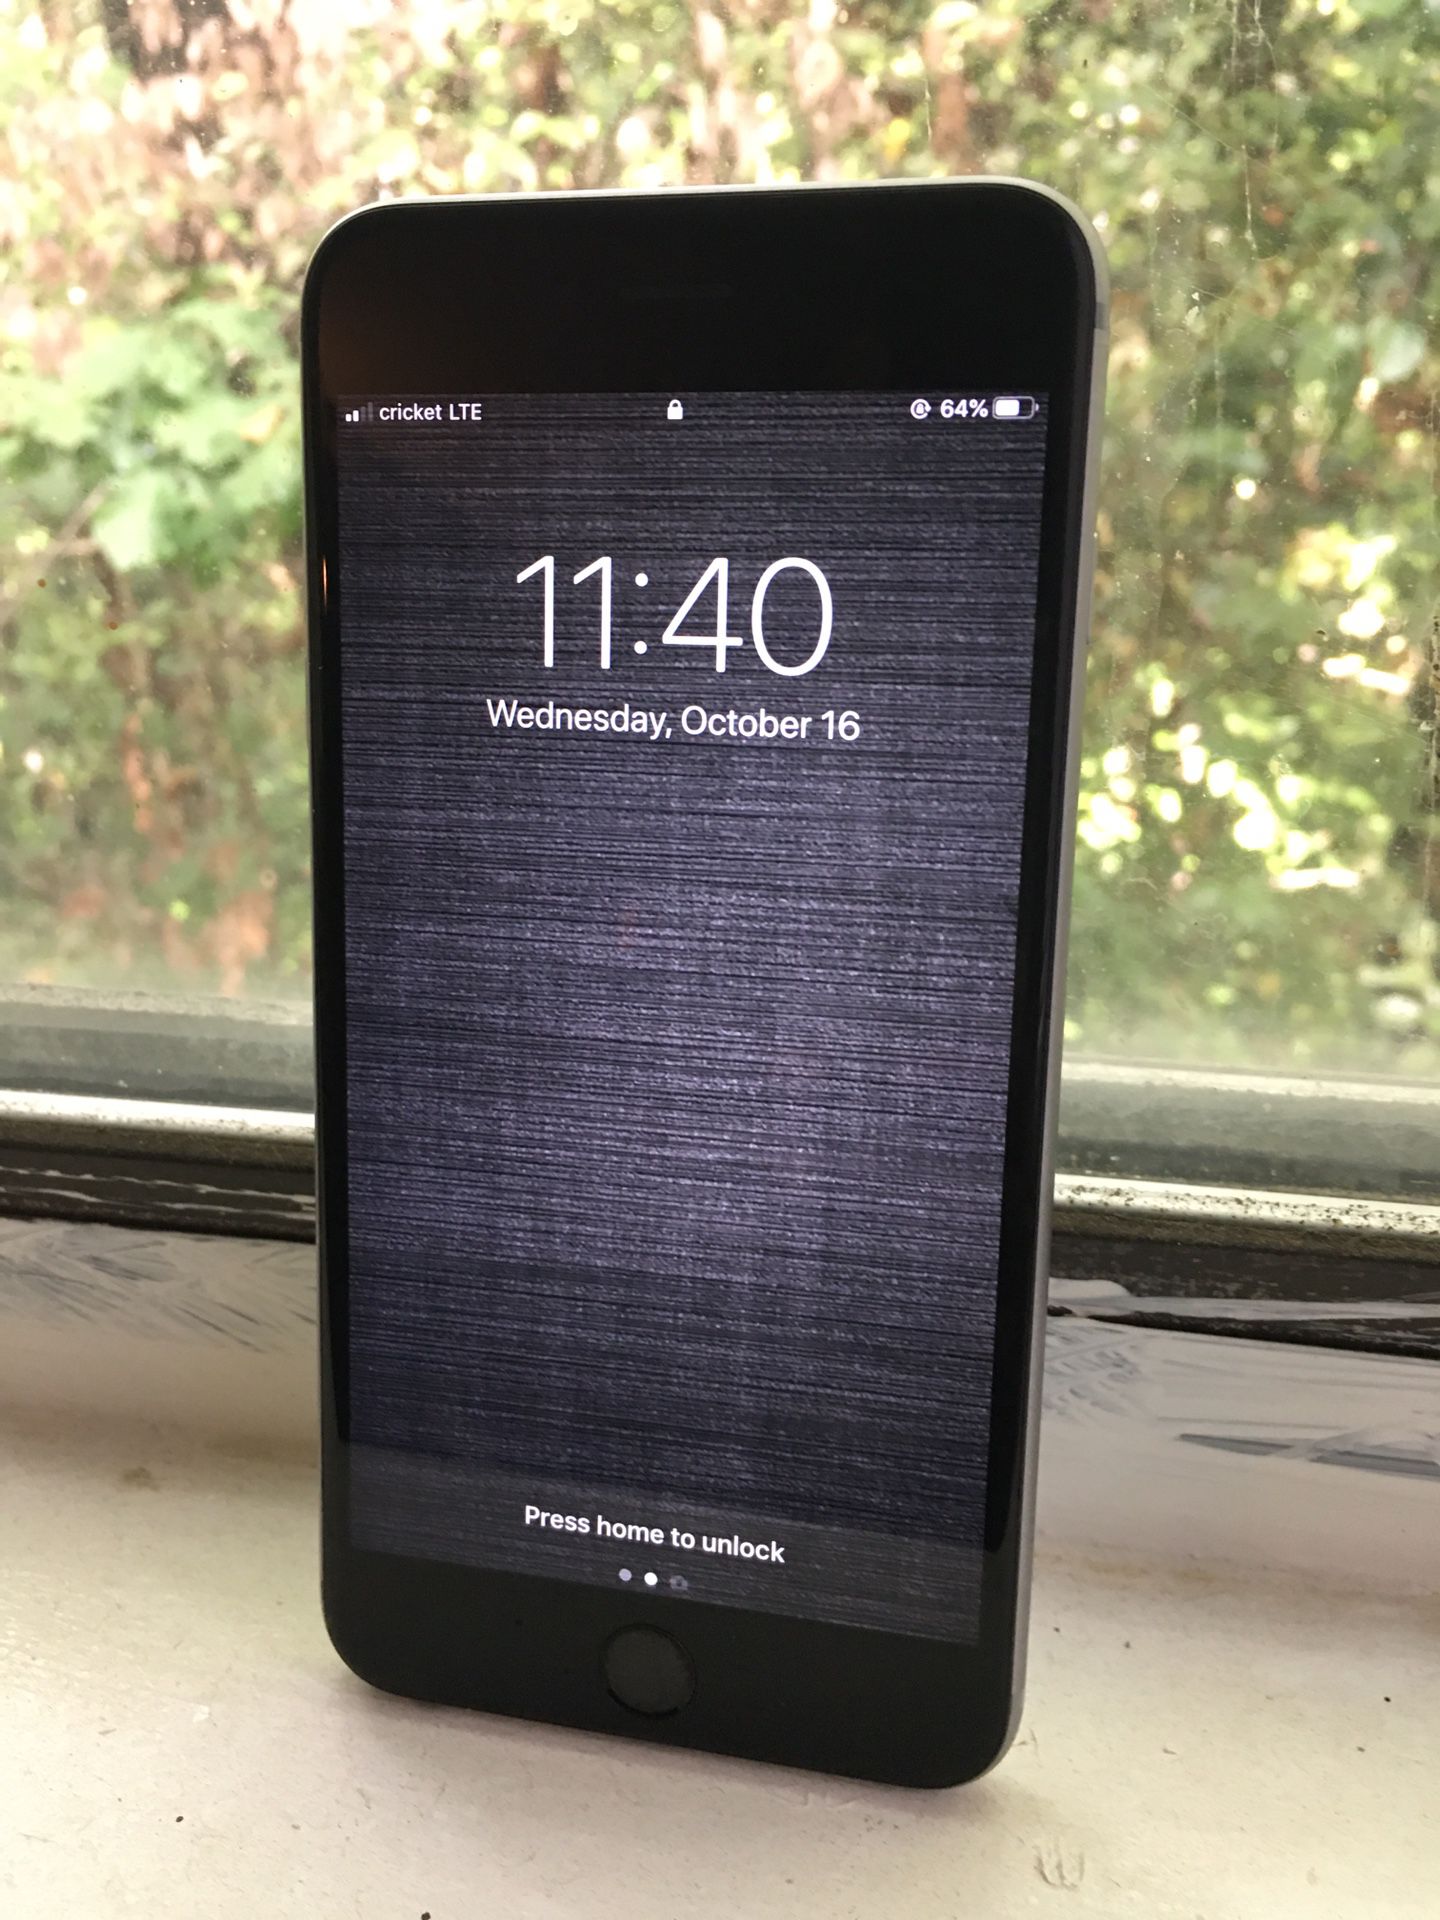 iPhone 6s Plus 64gb space grey fully unlocked